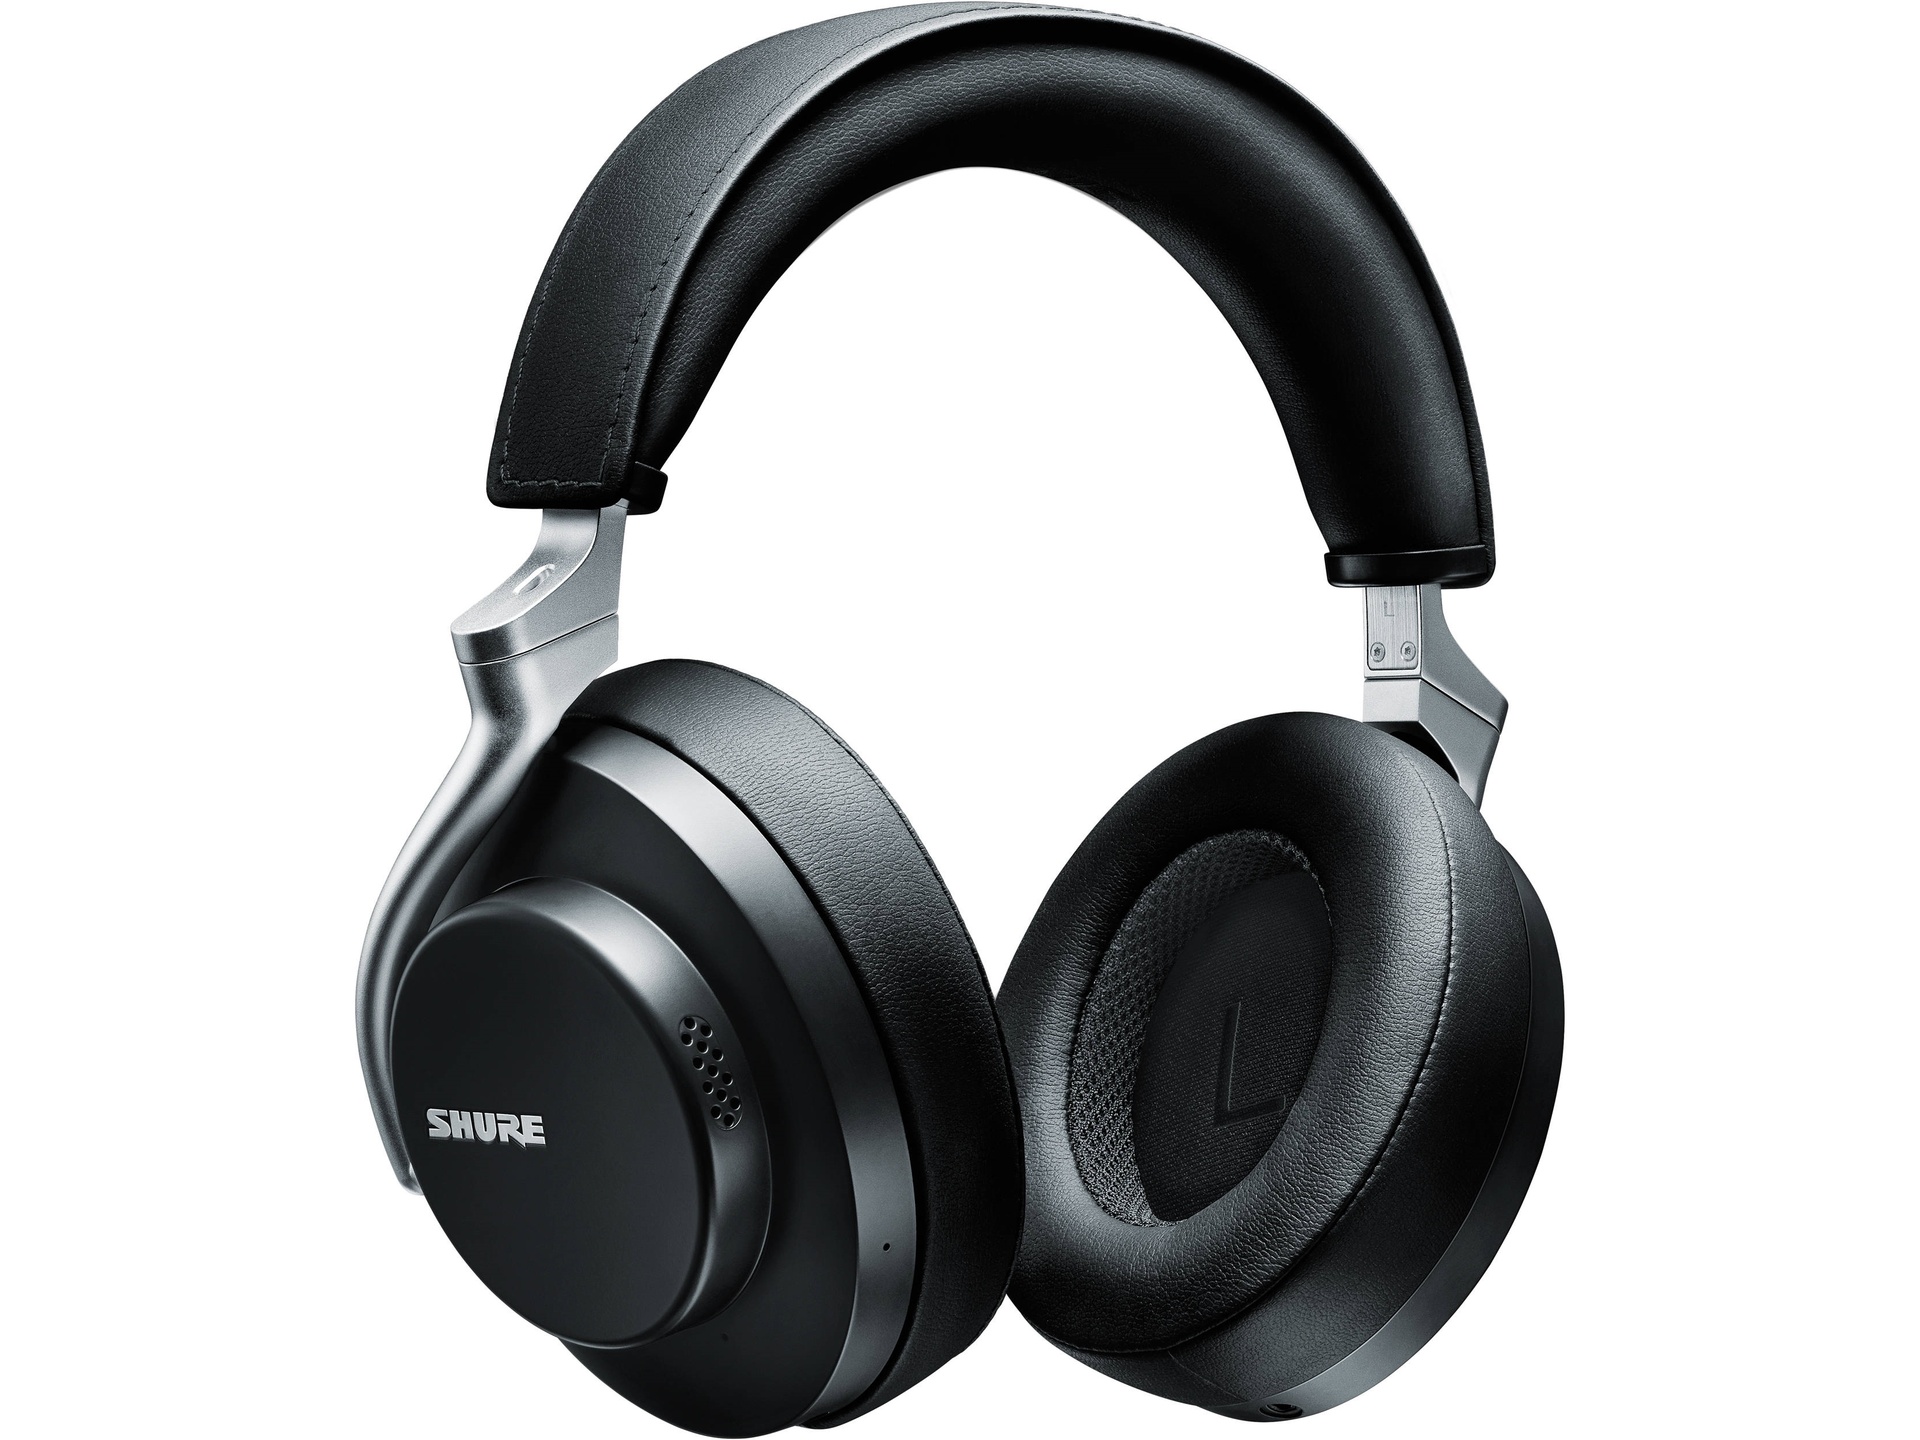 Shure AONIC 50 Wireless Noise-Canceling Headphones (Black)